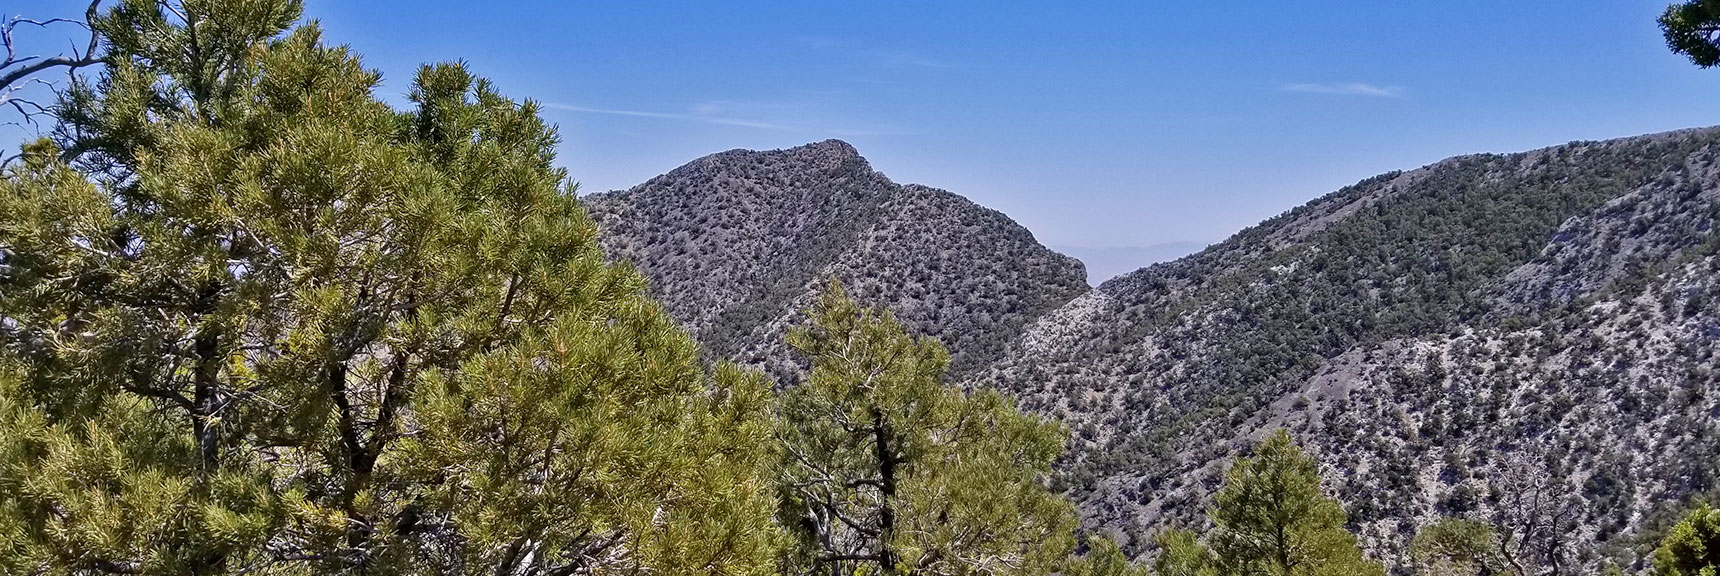 La Madre and El Padre Mountain, La Madre Mountains Wilderness, Nevada